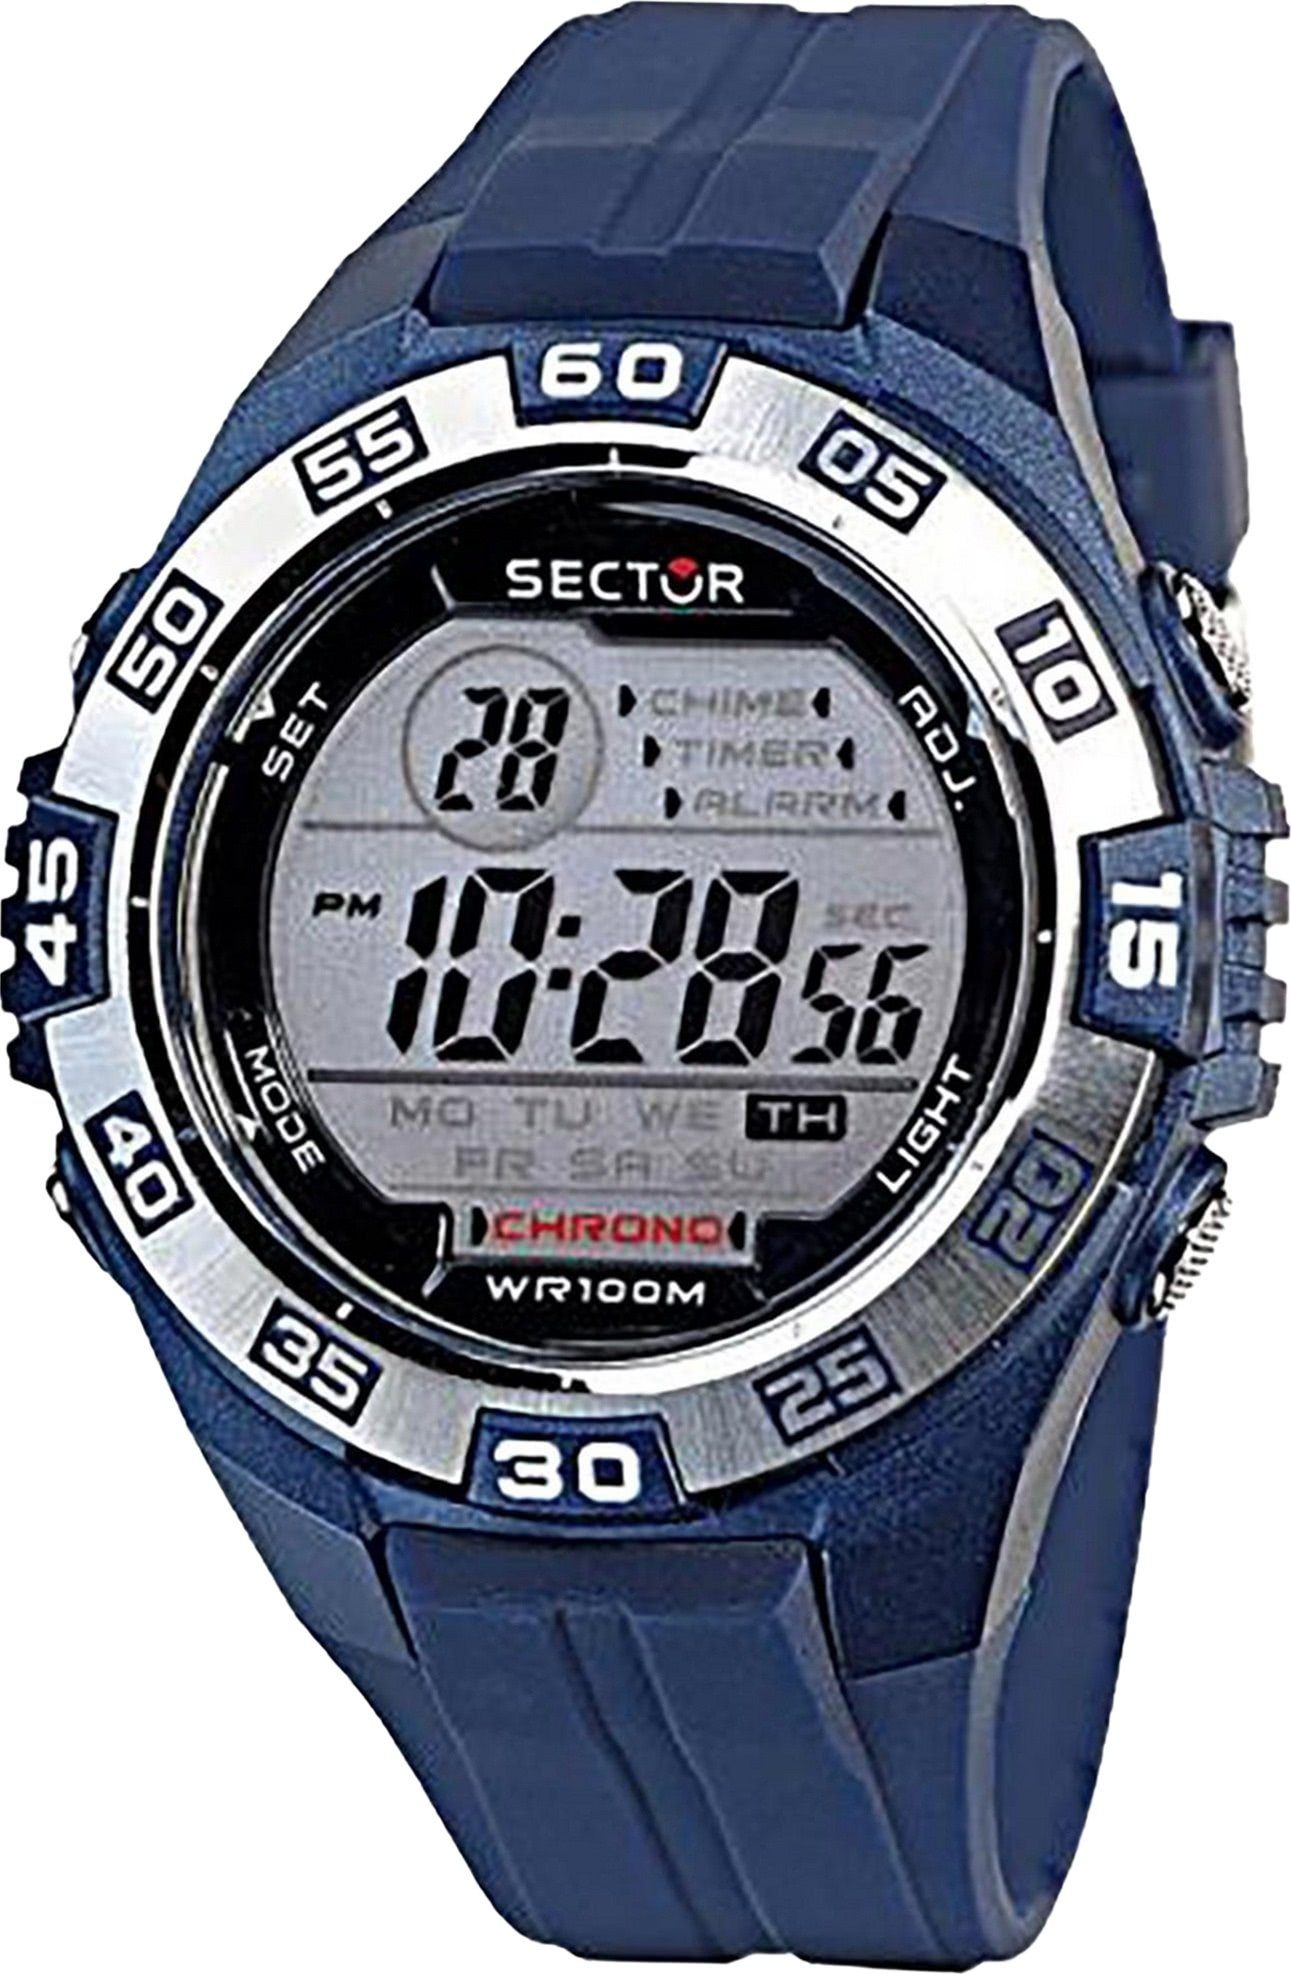 45mm), Sector Sector Armbanduhr rund, Digital, Herren Fashion Herren groß (ca. Armbanduhr blau, PURarmband Chronograph